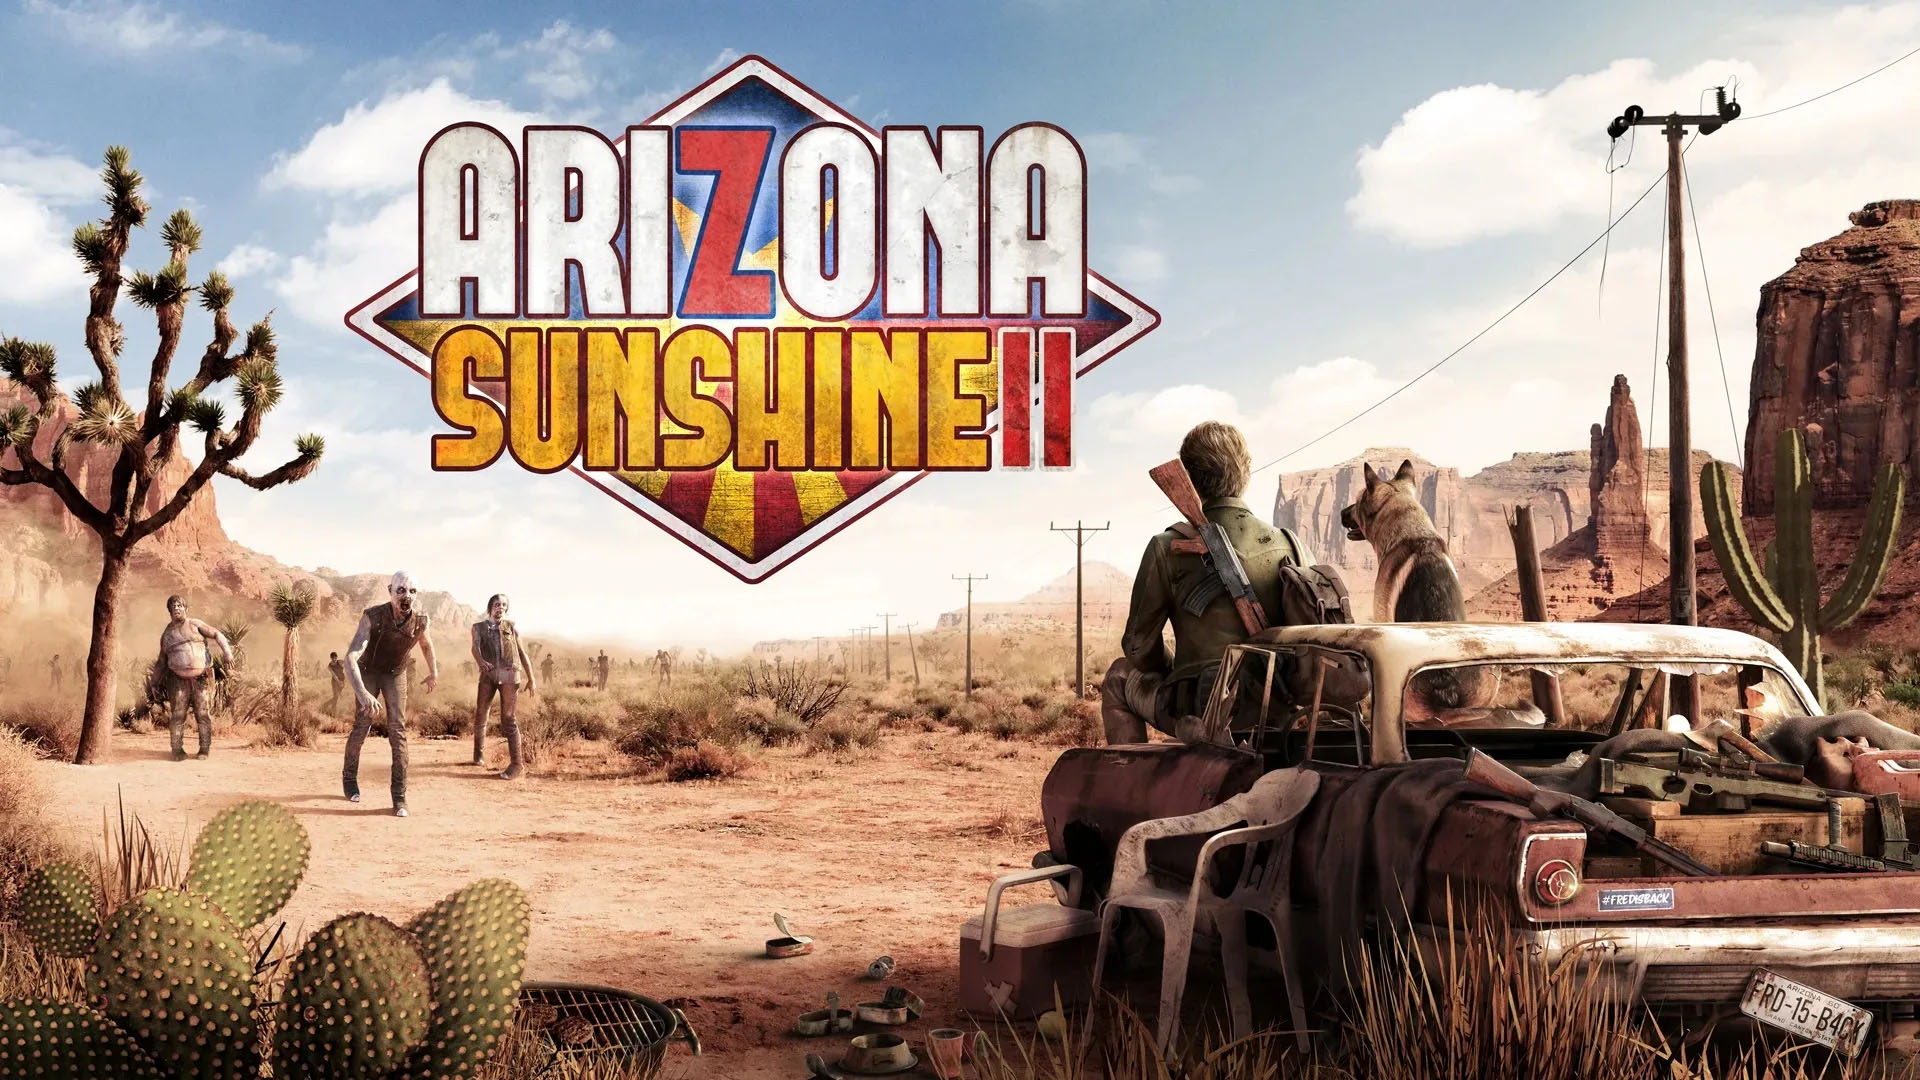 Jaquette de "Arizona Sunshine 2".